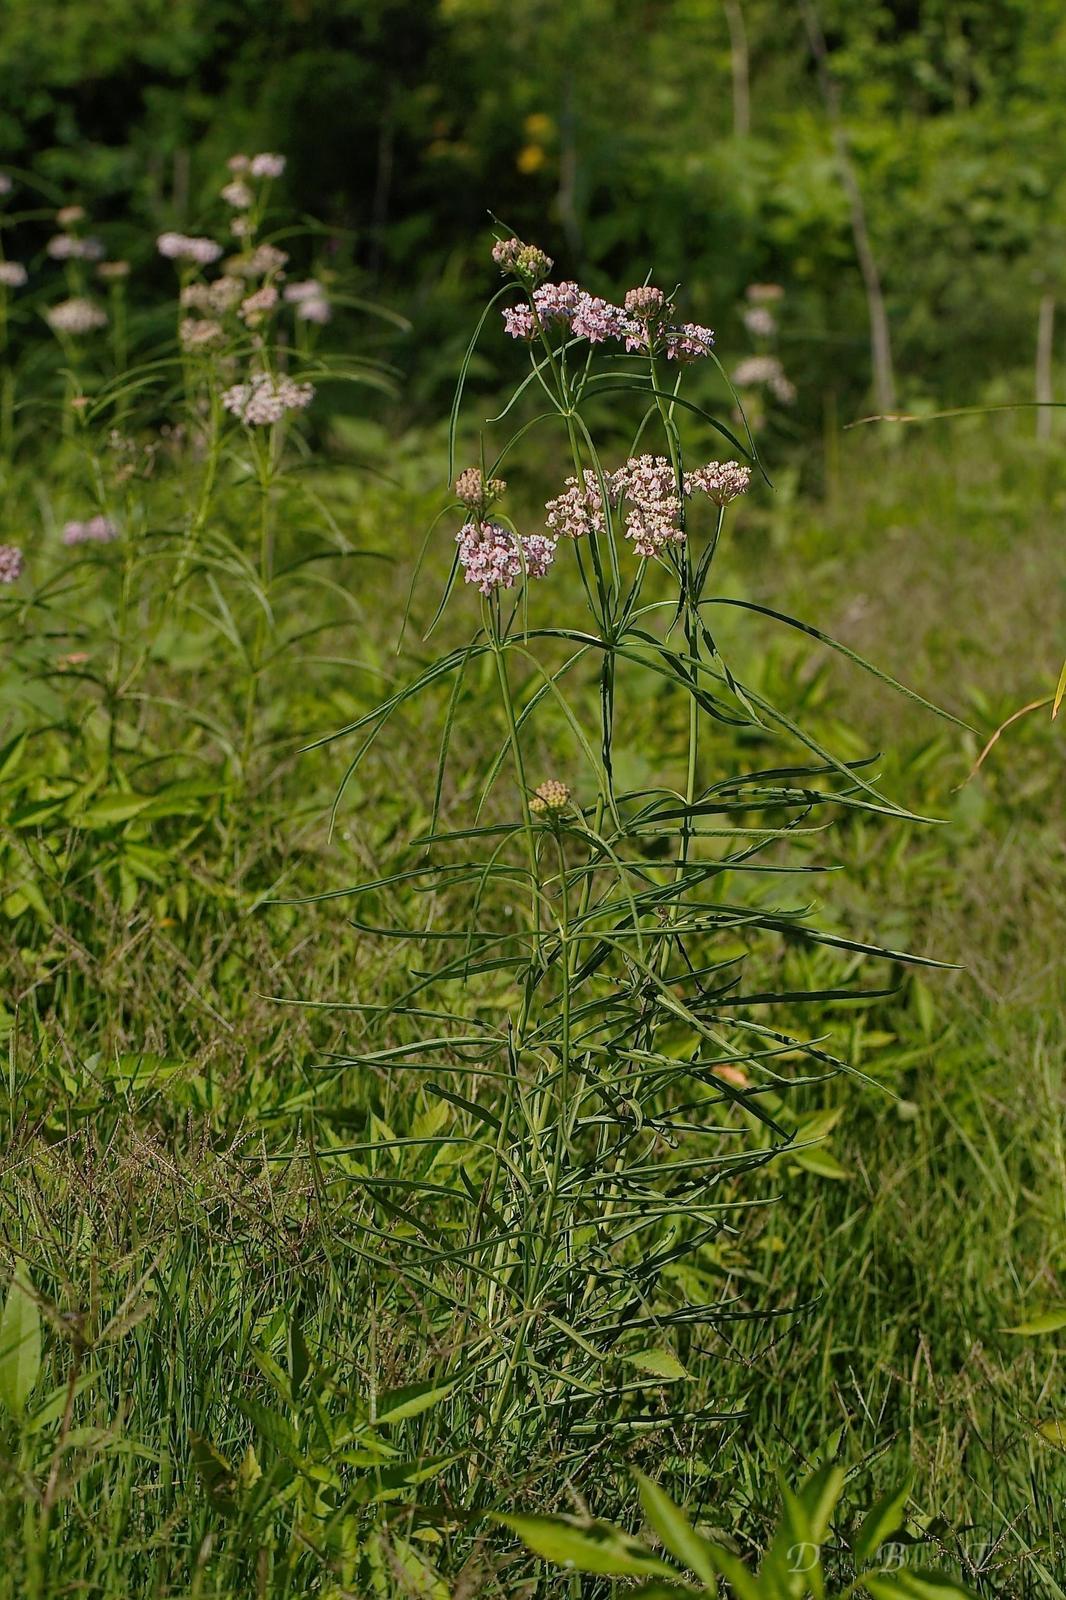 Narrow-leaved milkweed Photo by Digibirdtrek CA